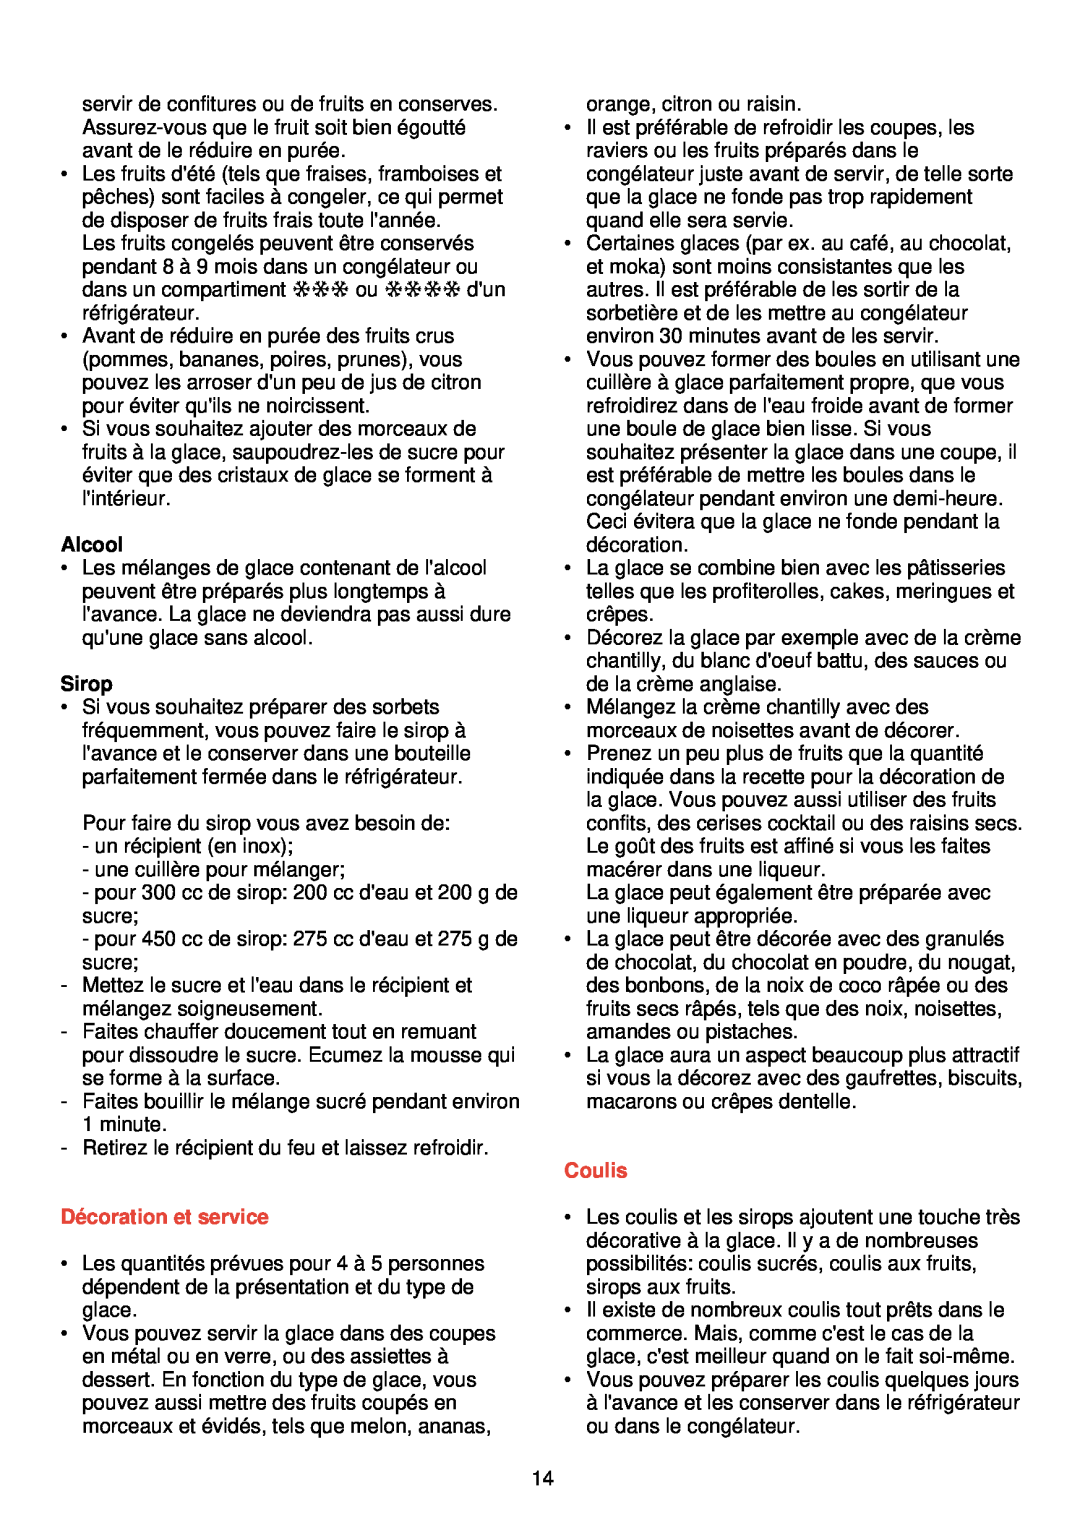 Philips HR 2300 manual Alcool, Sirop, Dé coration et service, Coulis 